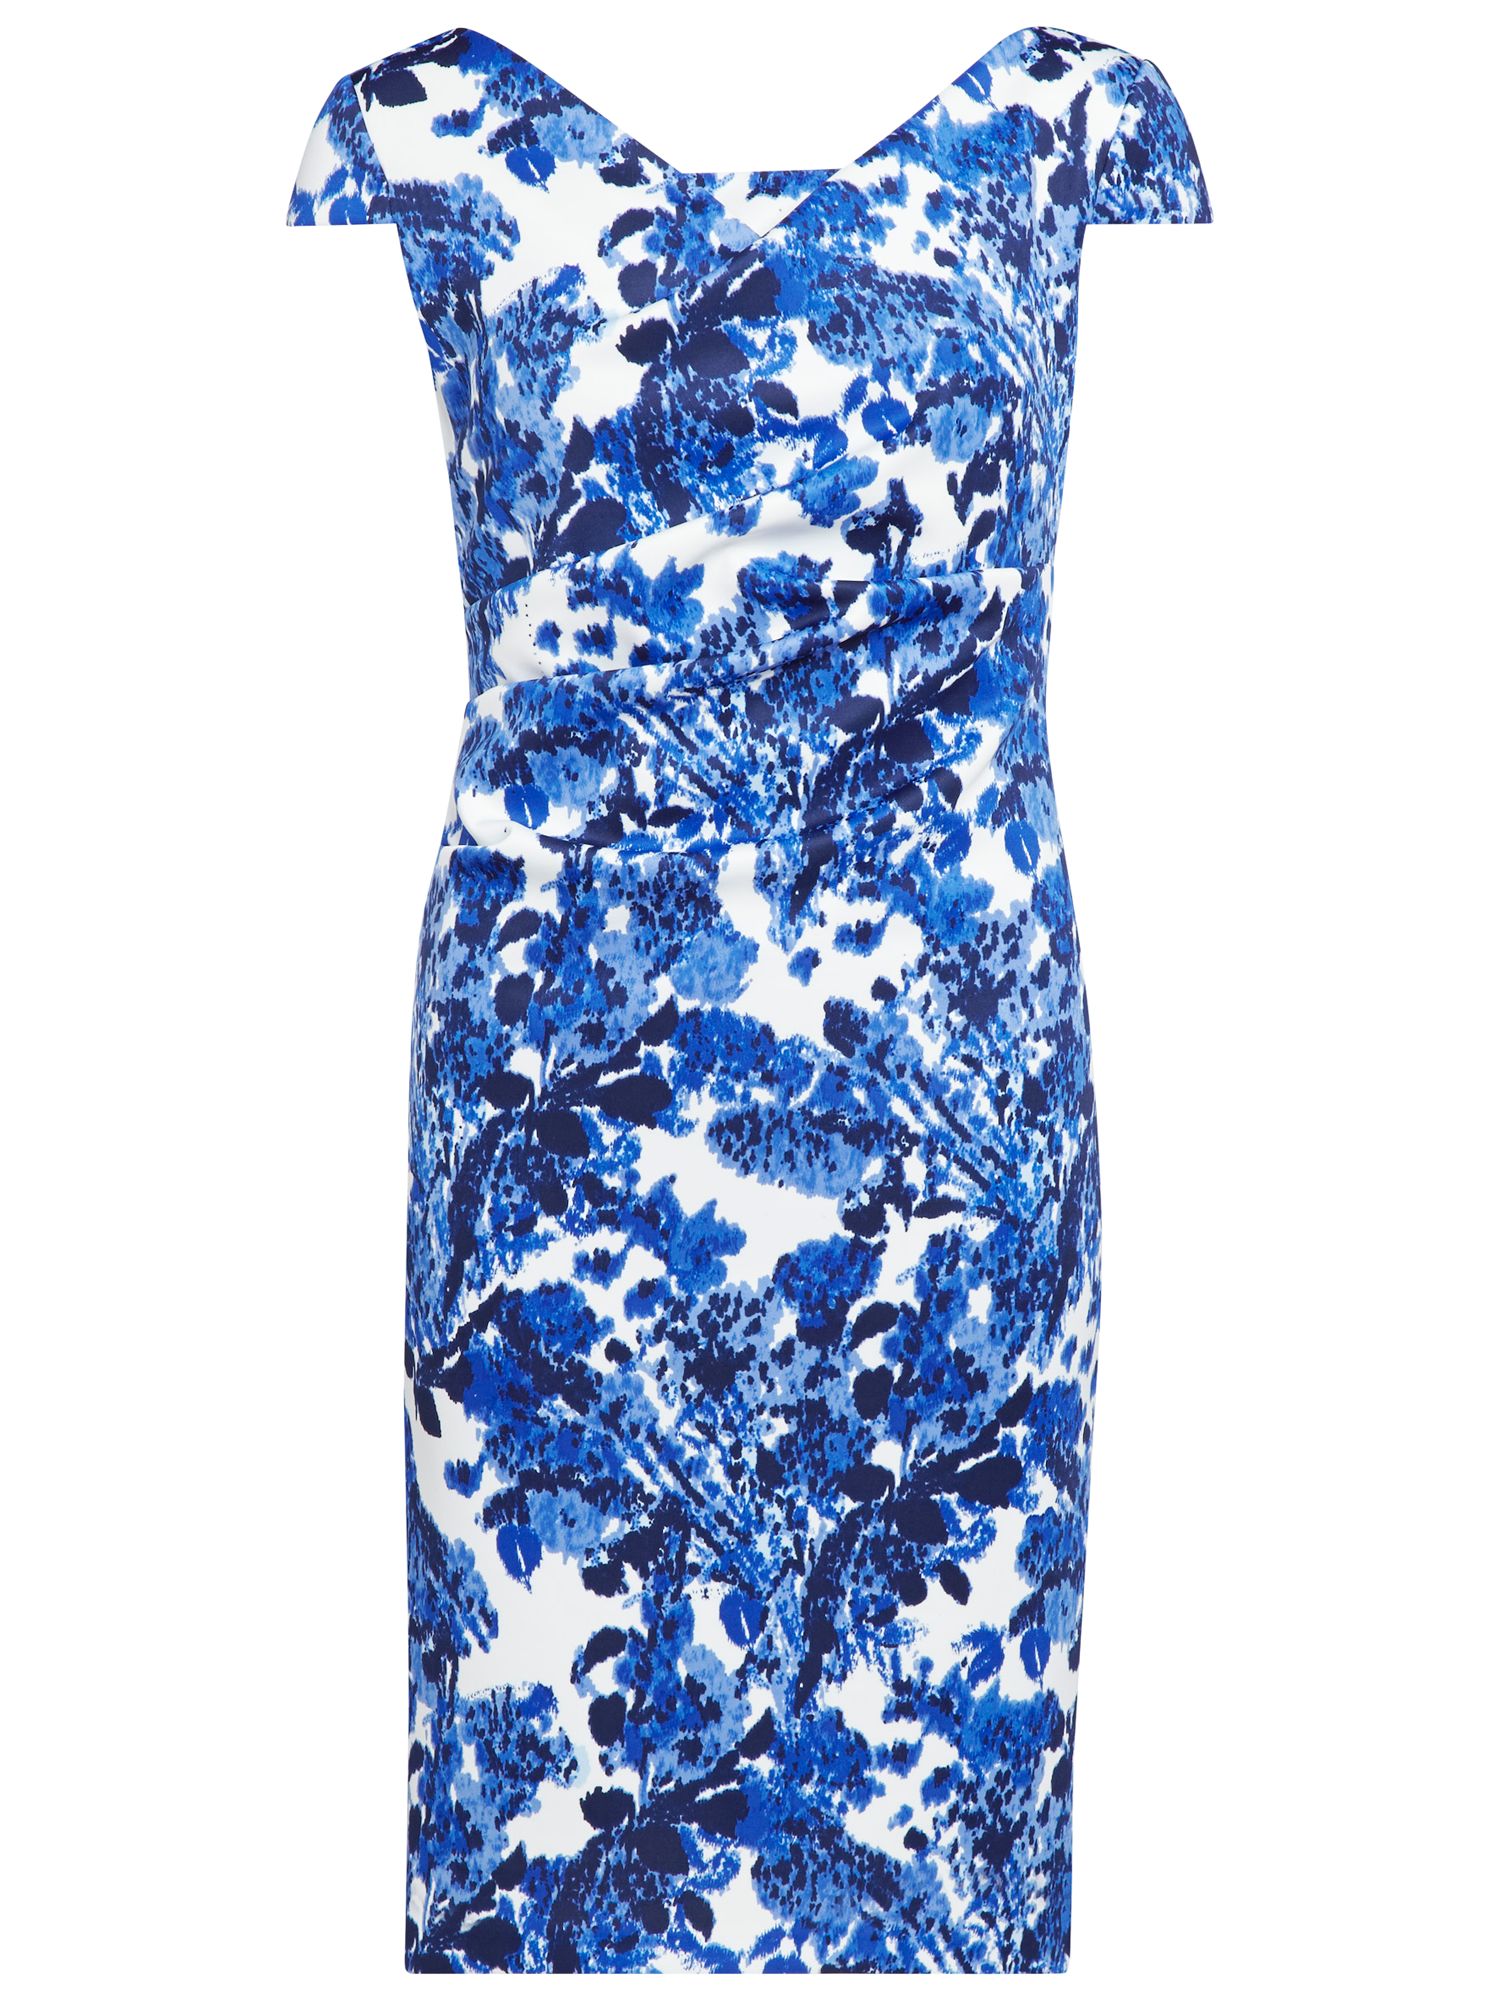 Gina Bacconi Scuba Print Dress, Blue